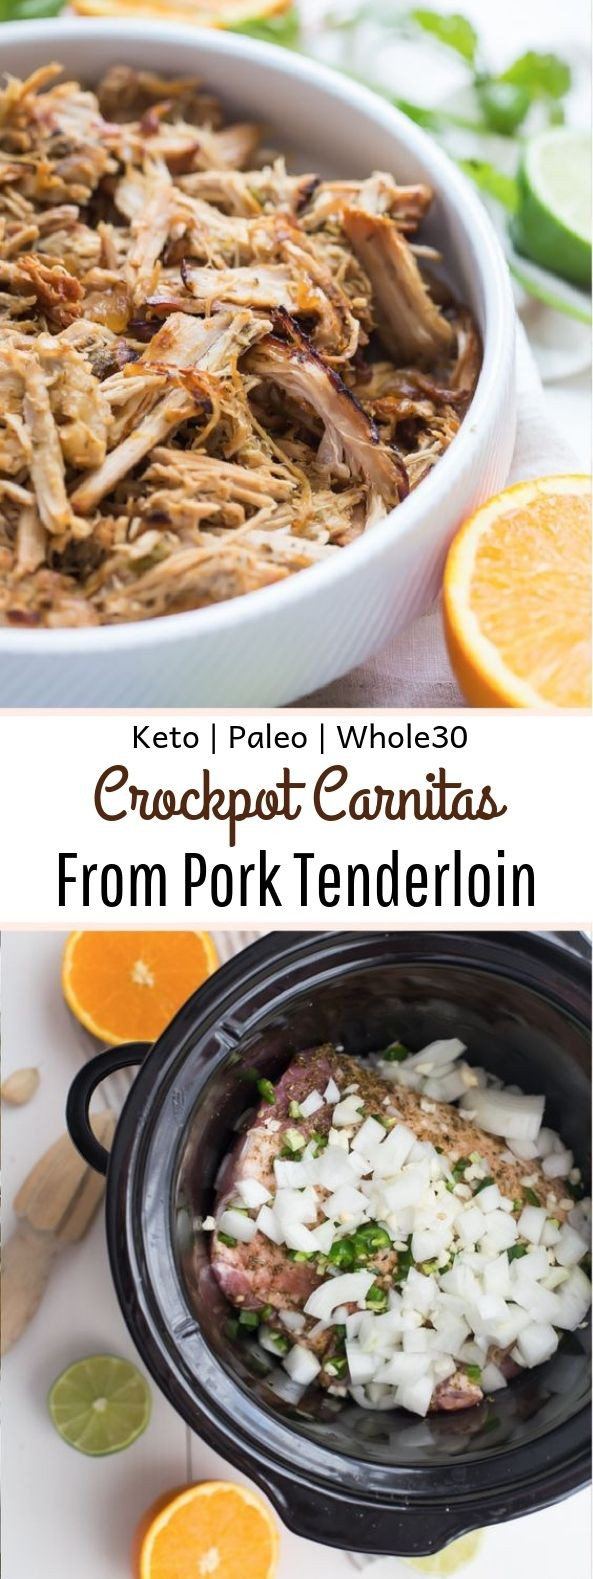 Crockpot Keto Pork Tenderloin
 Crockpot Carnitas from Pork Tenderloin Paleo Whole30